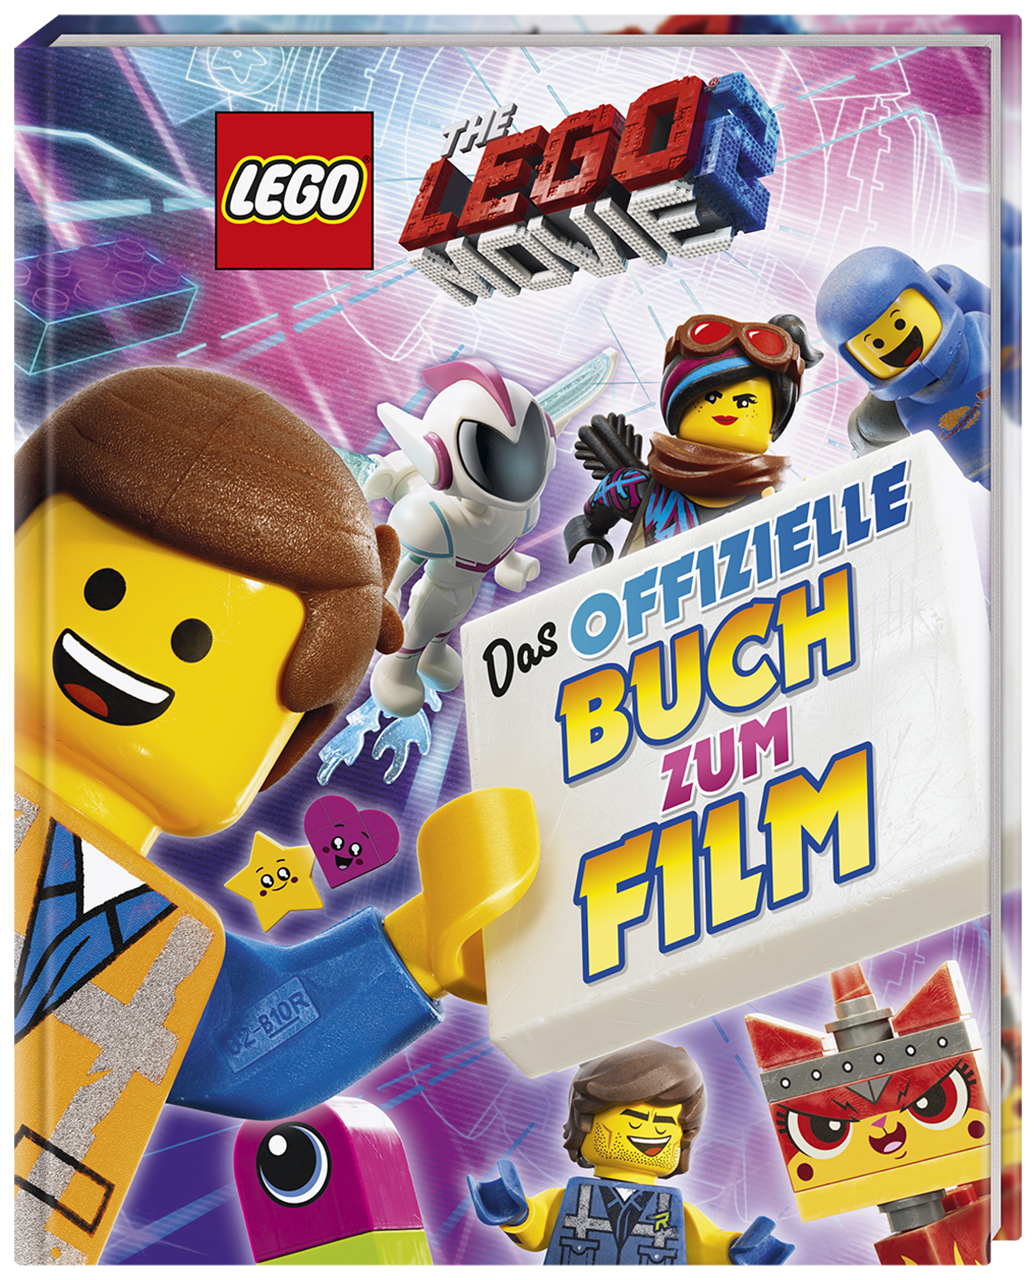 THE LEGO® MOVIE 2 Das offizielle Buch zum Film; Deutsch; Mit farbigen Fotos (Mängelexemplar)